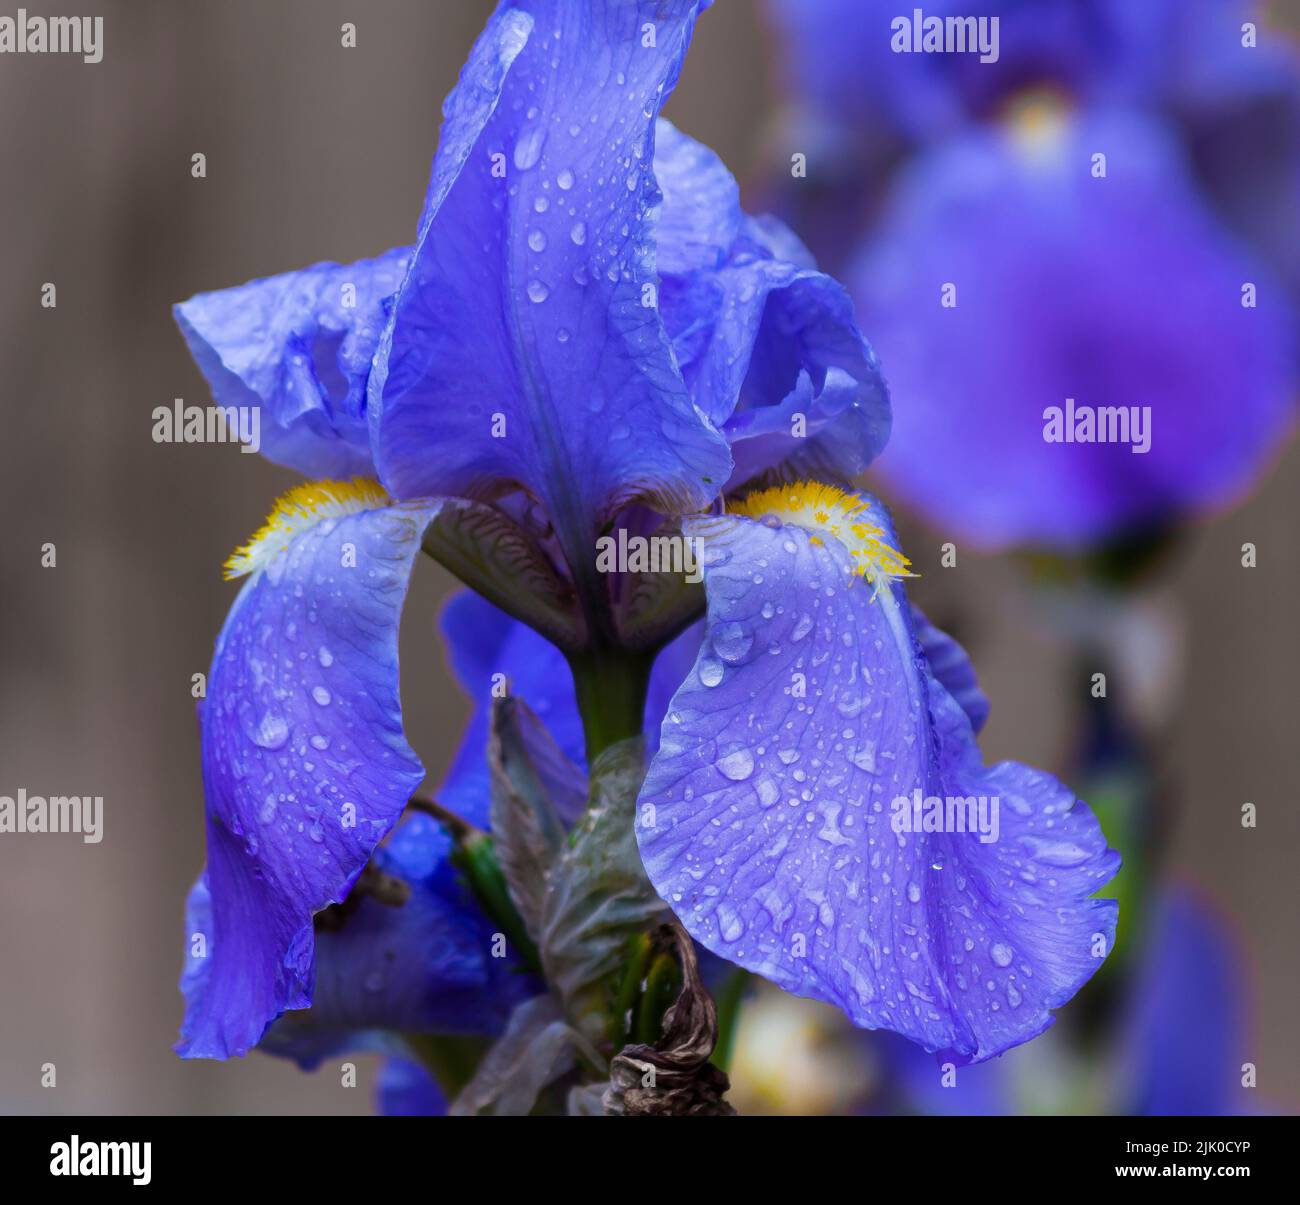 Blue Iris in the rain - the Iris symbolises faith and hope Stock Photo